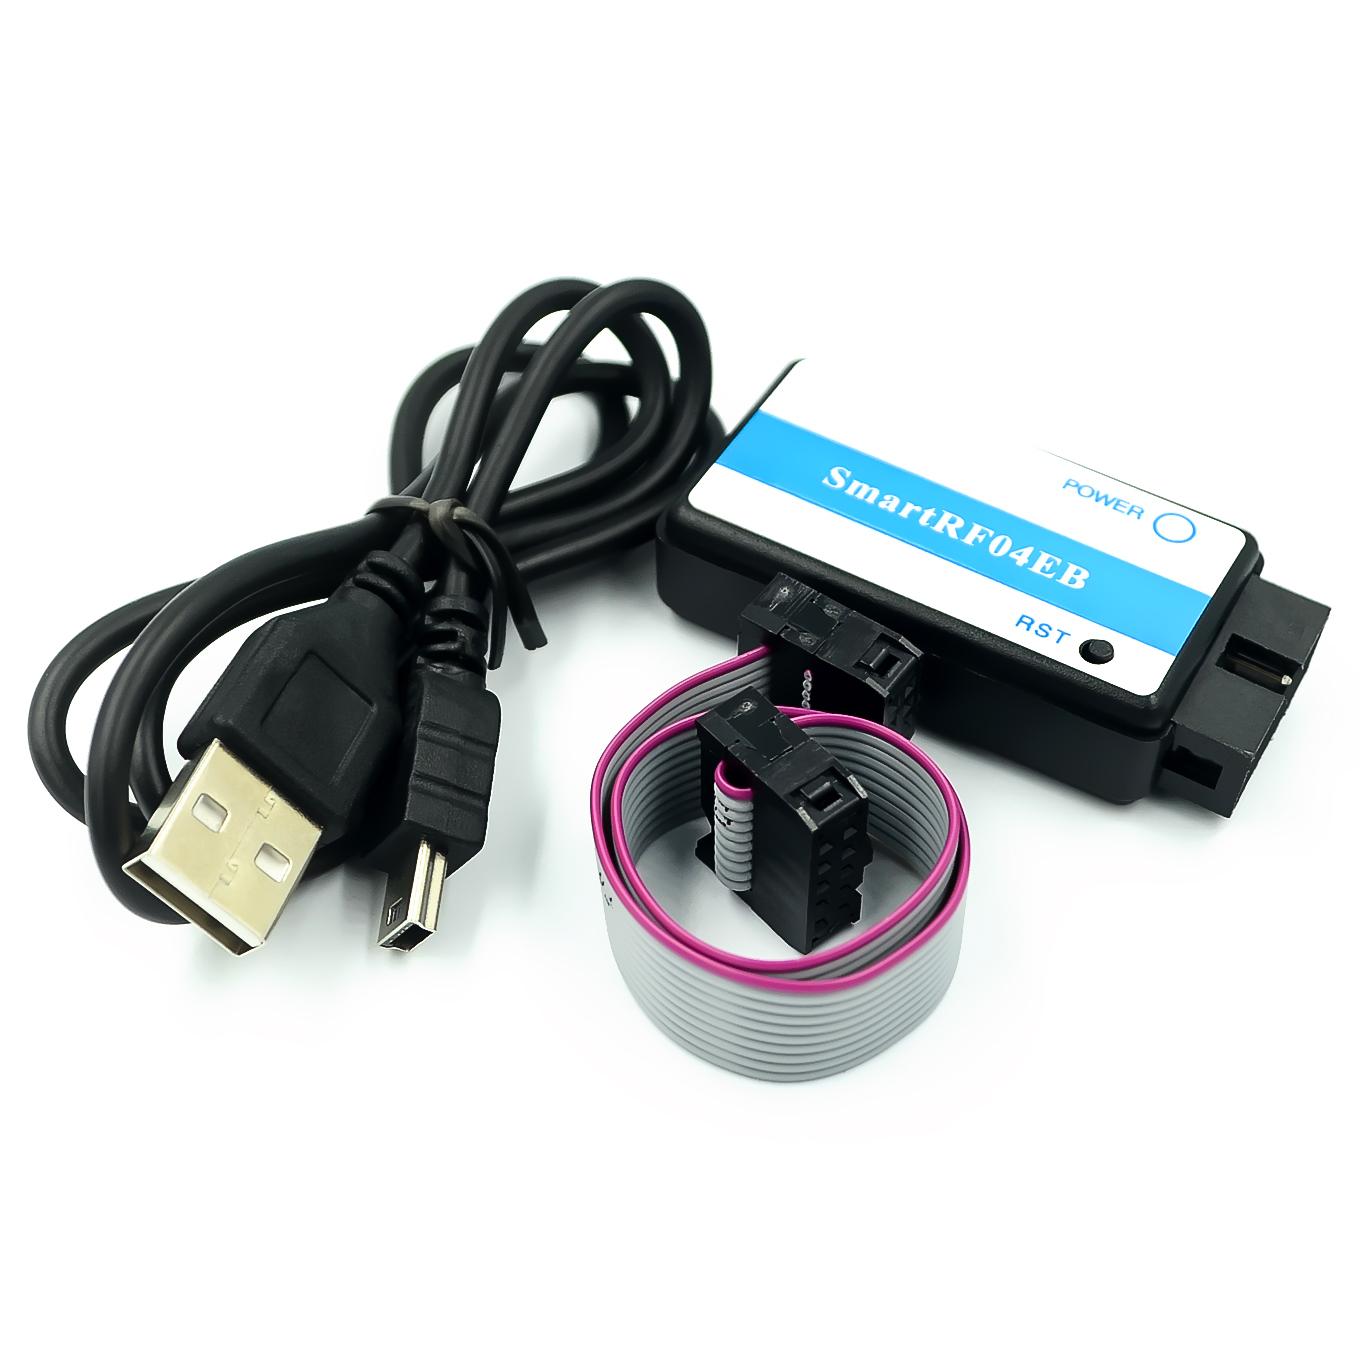 SmartRF04EB CC1110 CC2530 ZigBee Module USB Downloader Emulator MCU M100 Powered by 5v micro USB 2.0 interface HDMI output